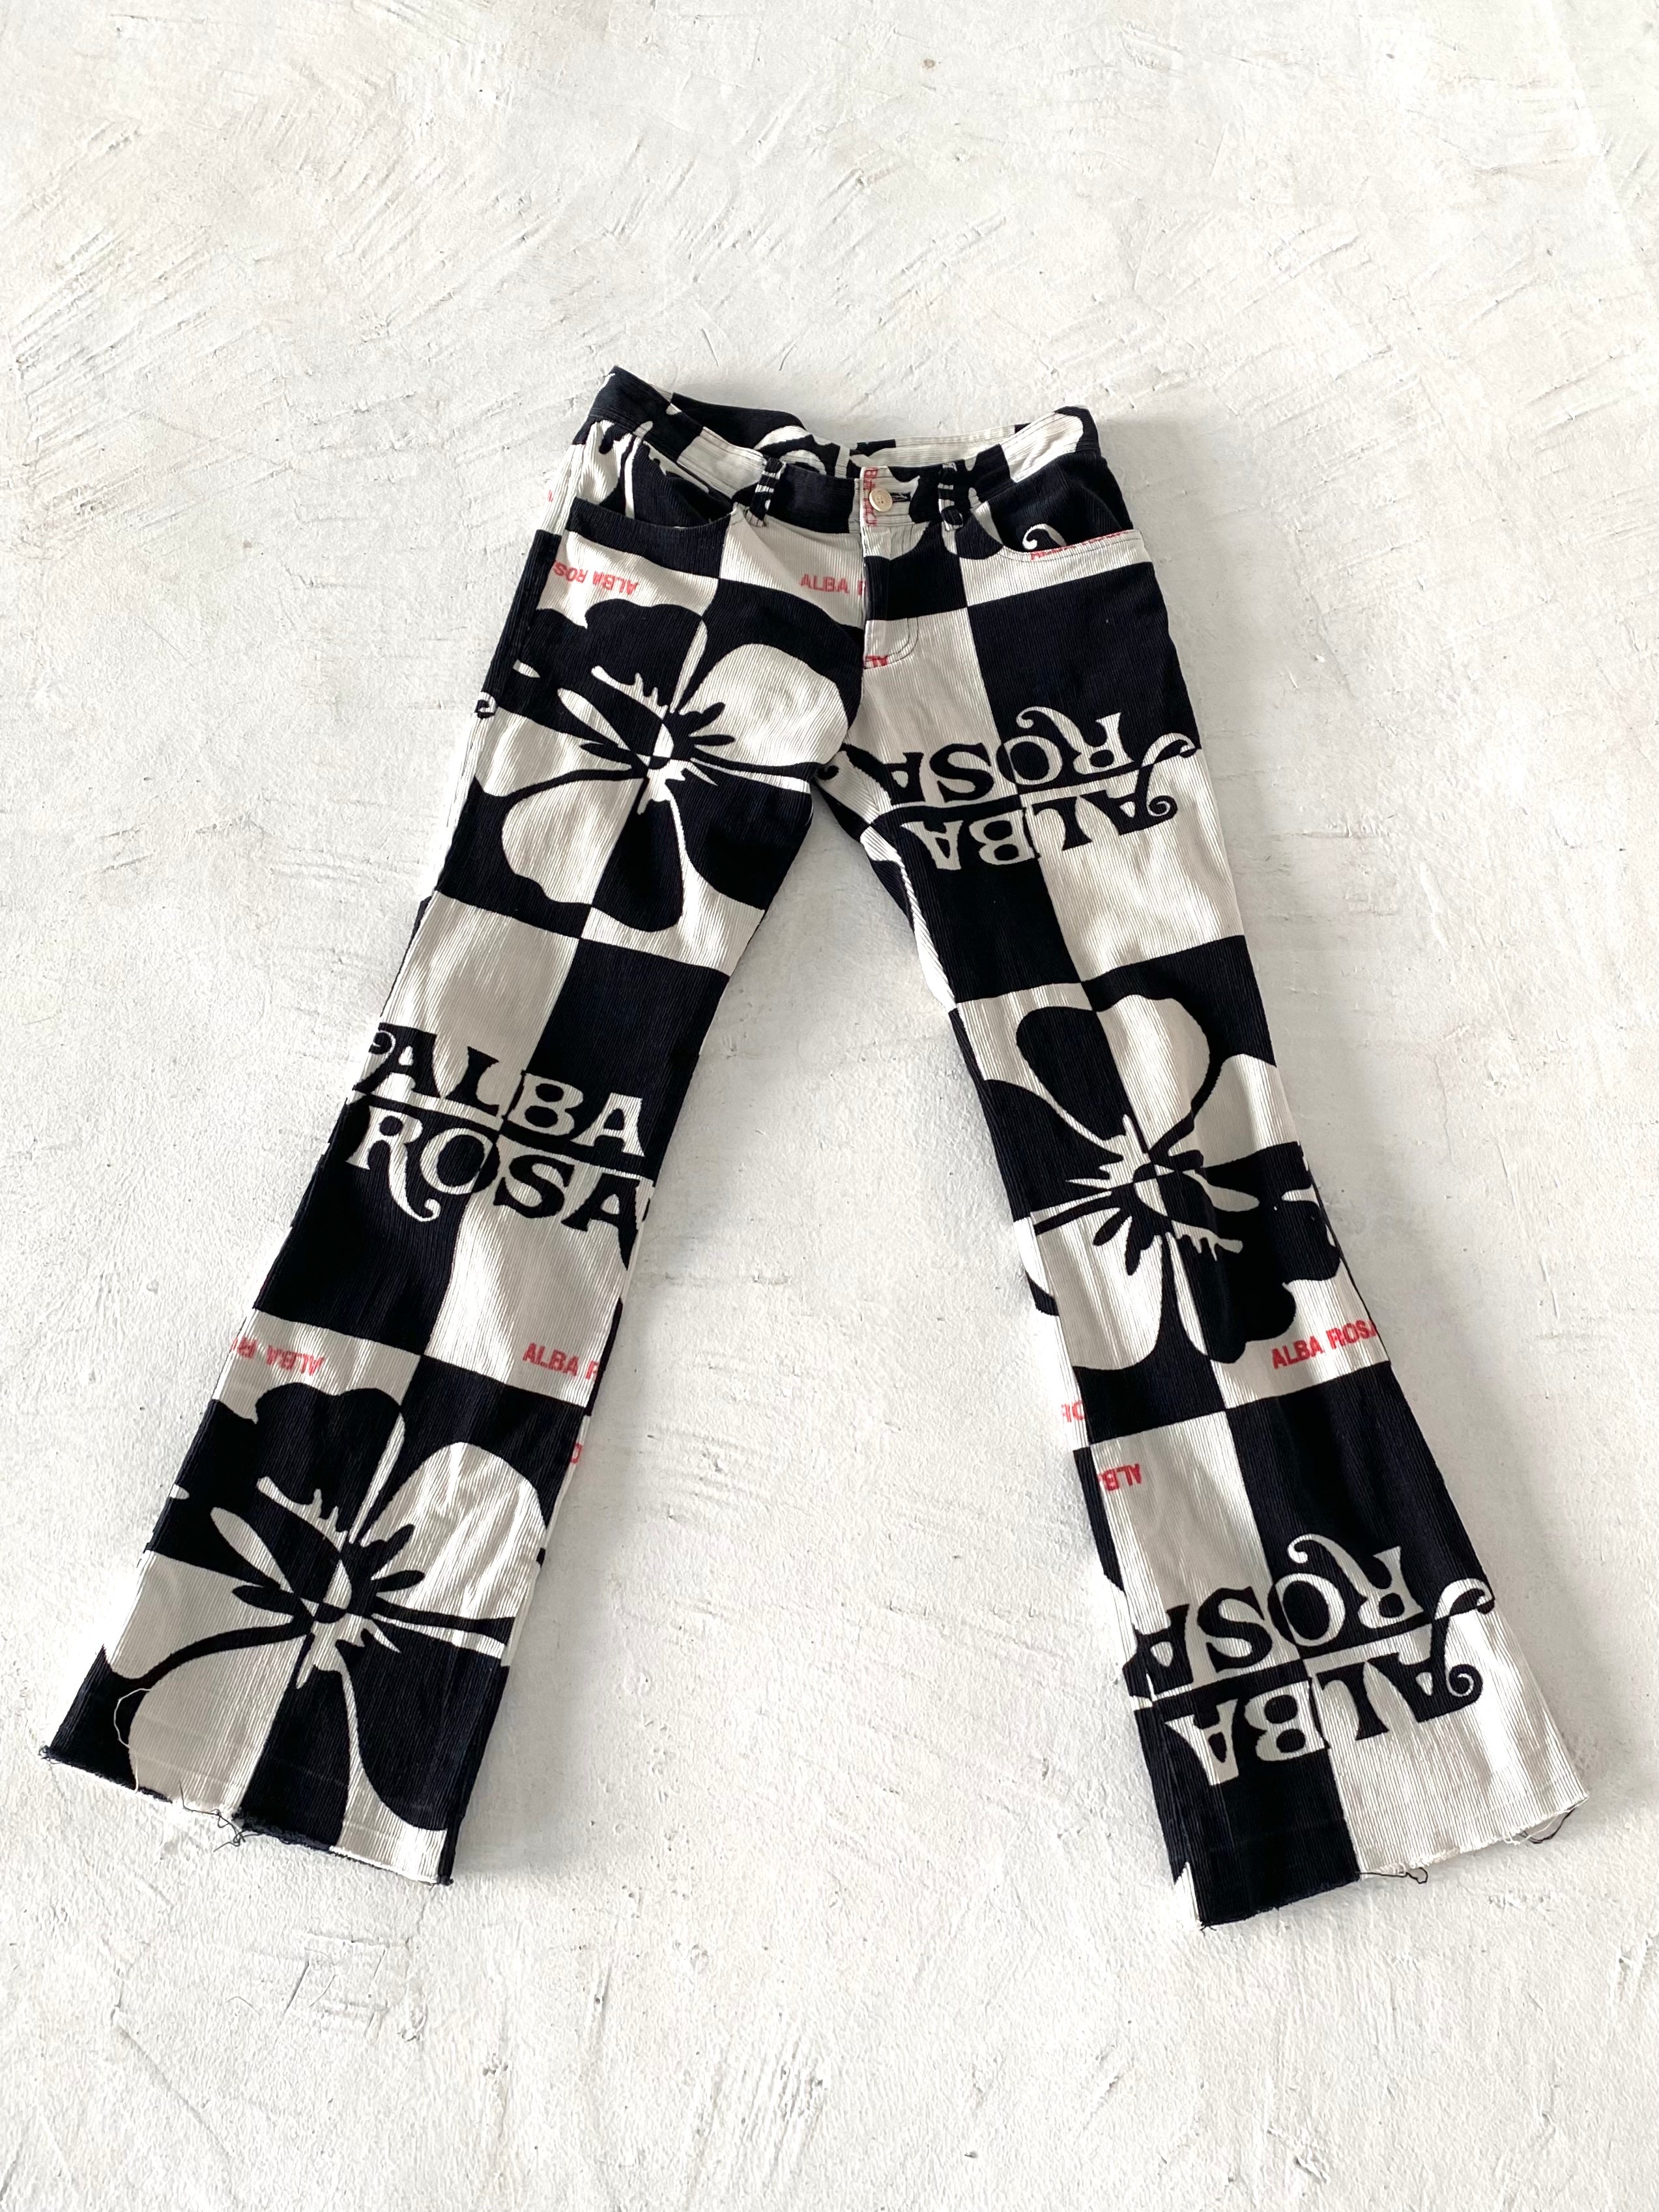 Vintage Alba Rosa Corduroy Full Print Low Waist Pants